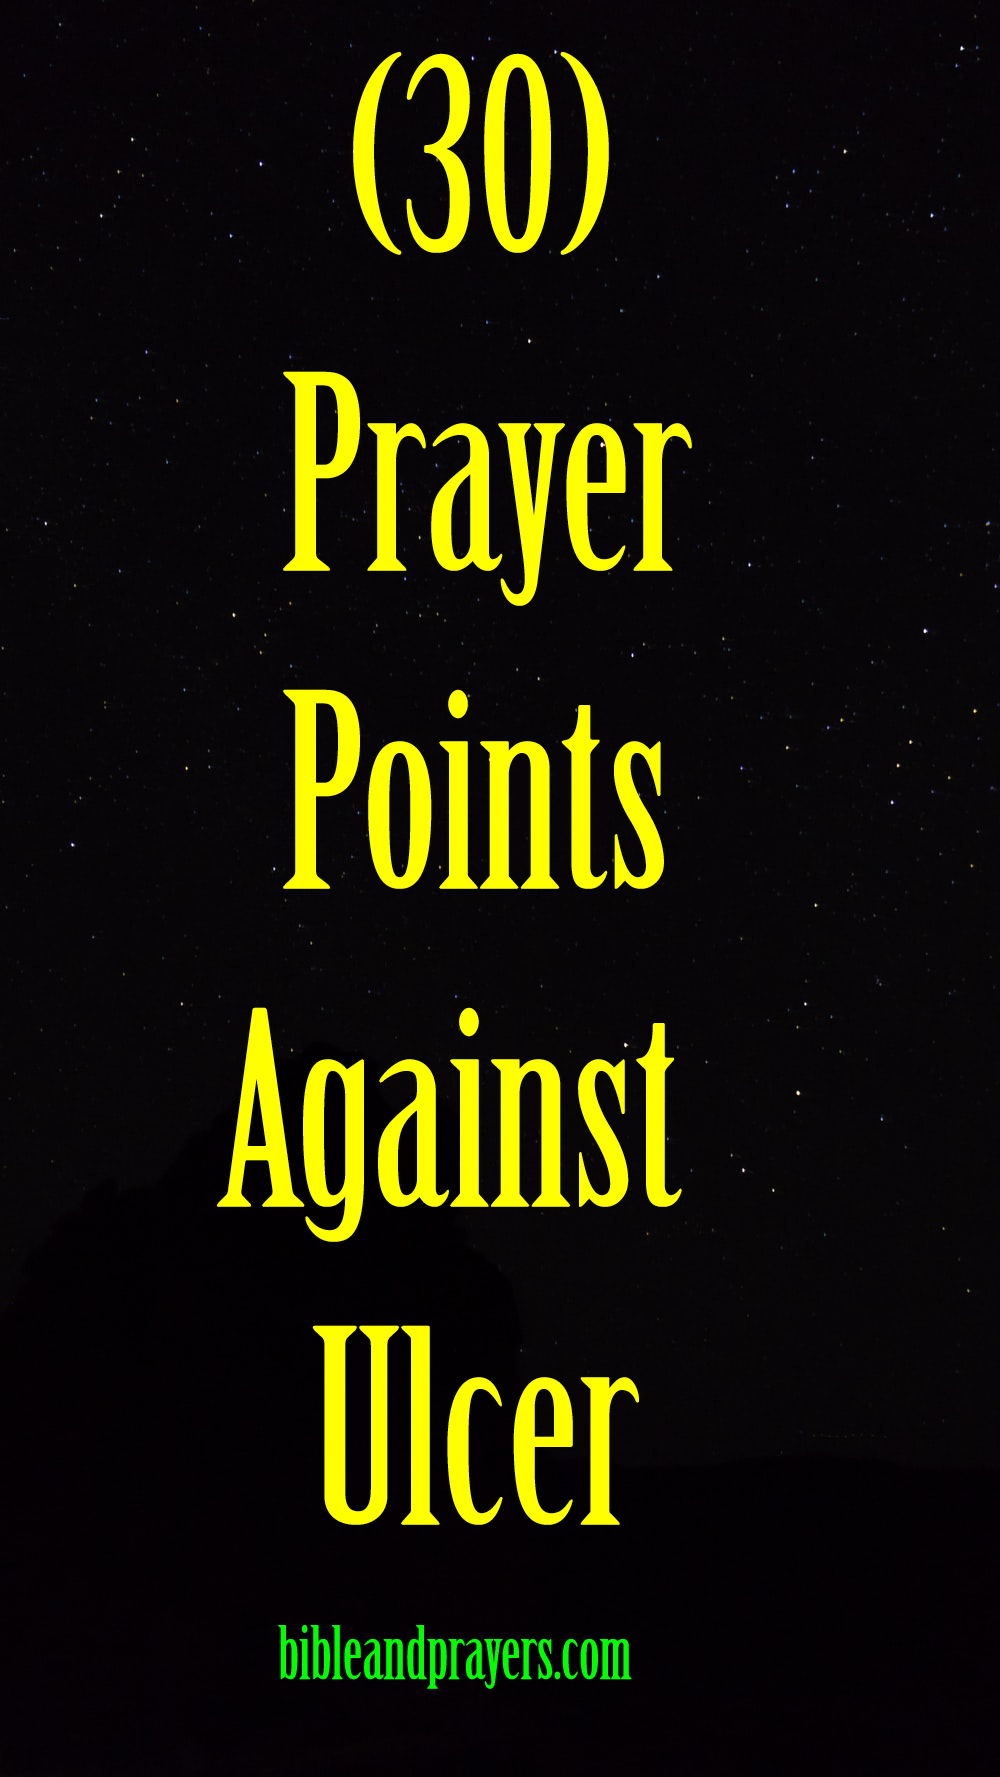 30 Prayer Points Against Ulcer